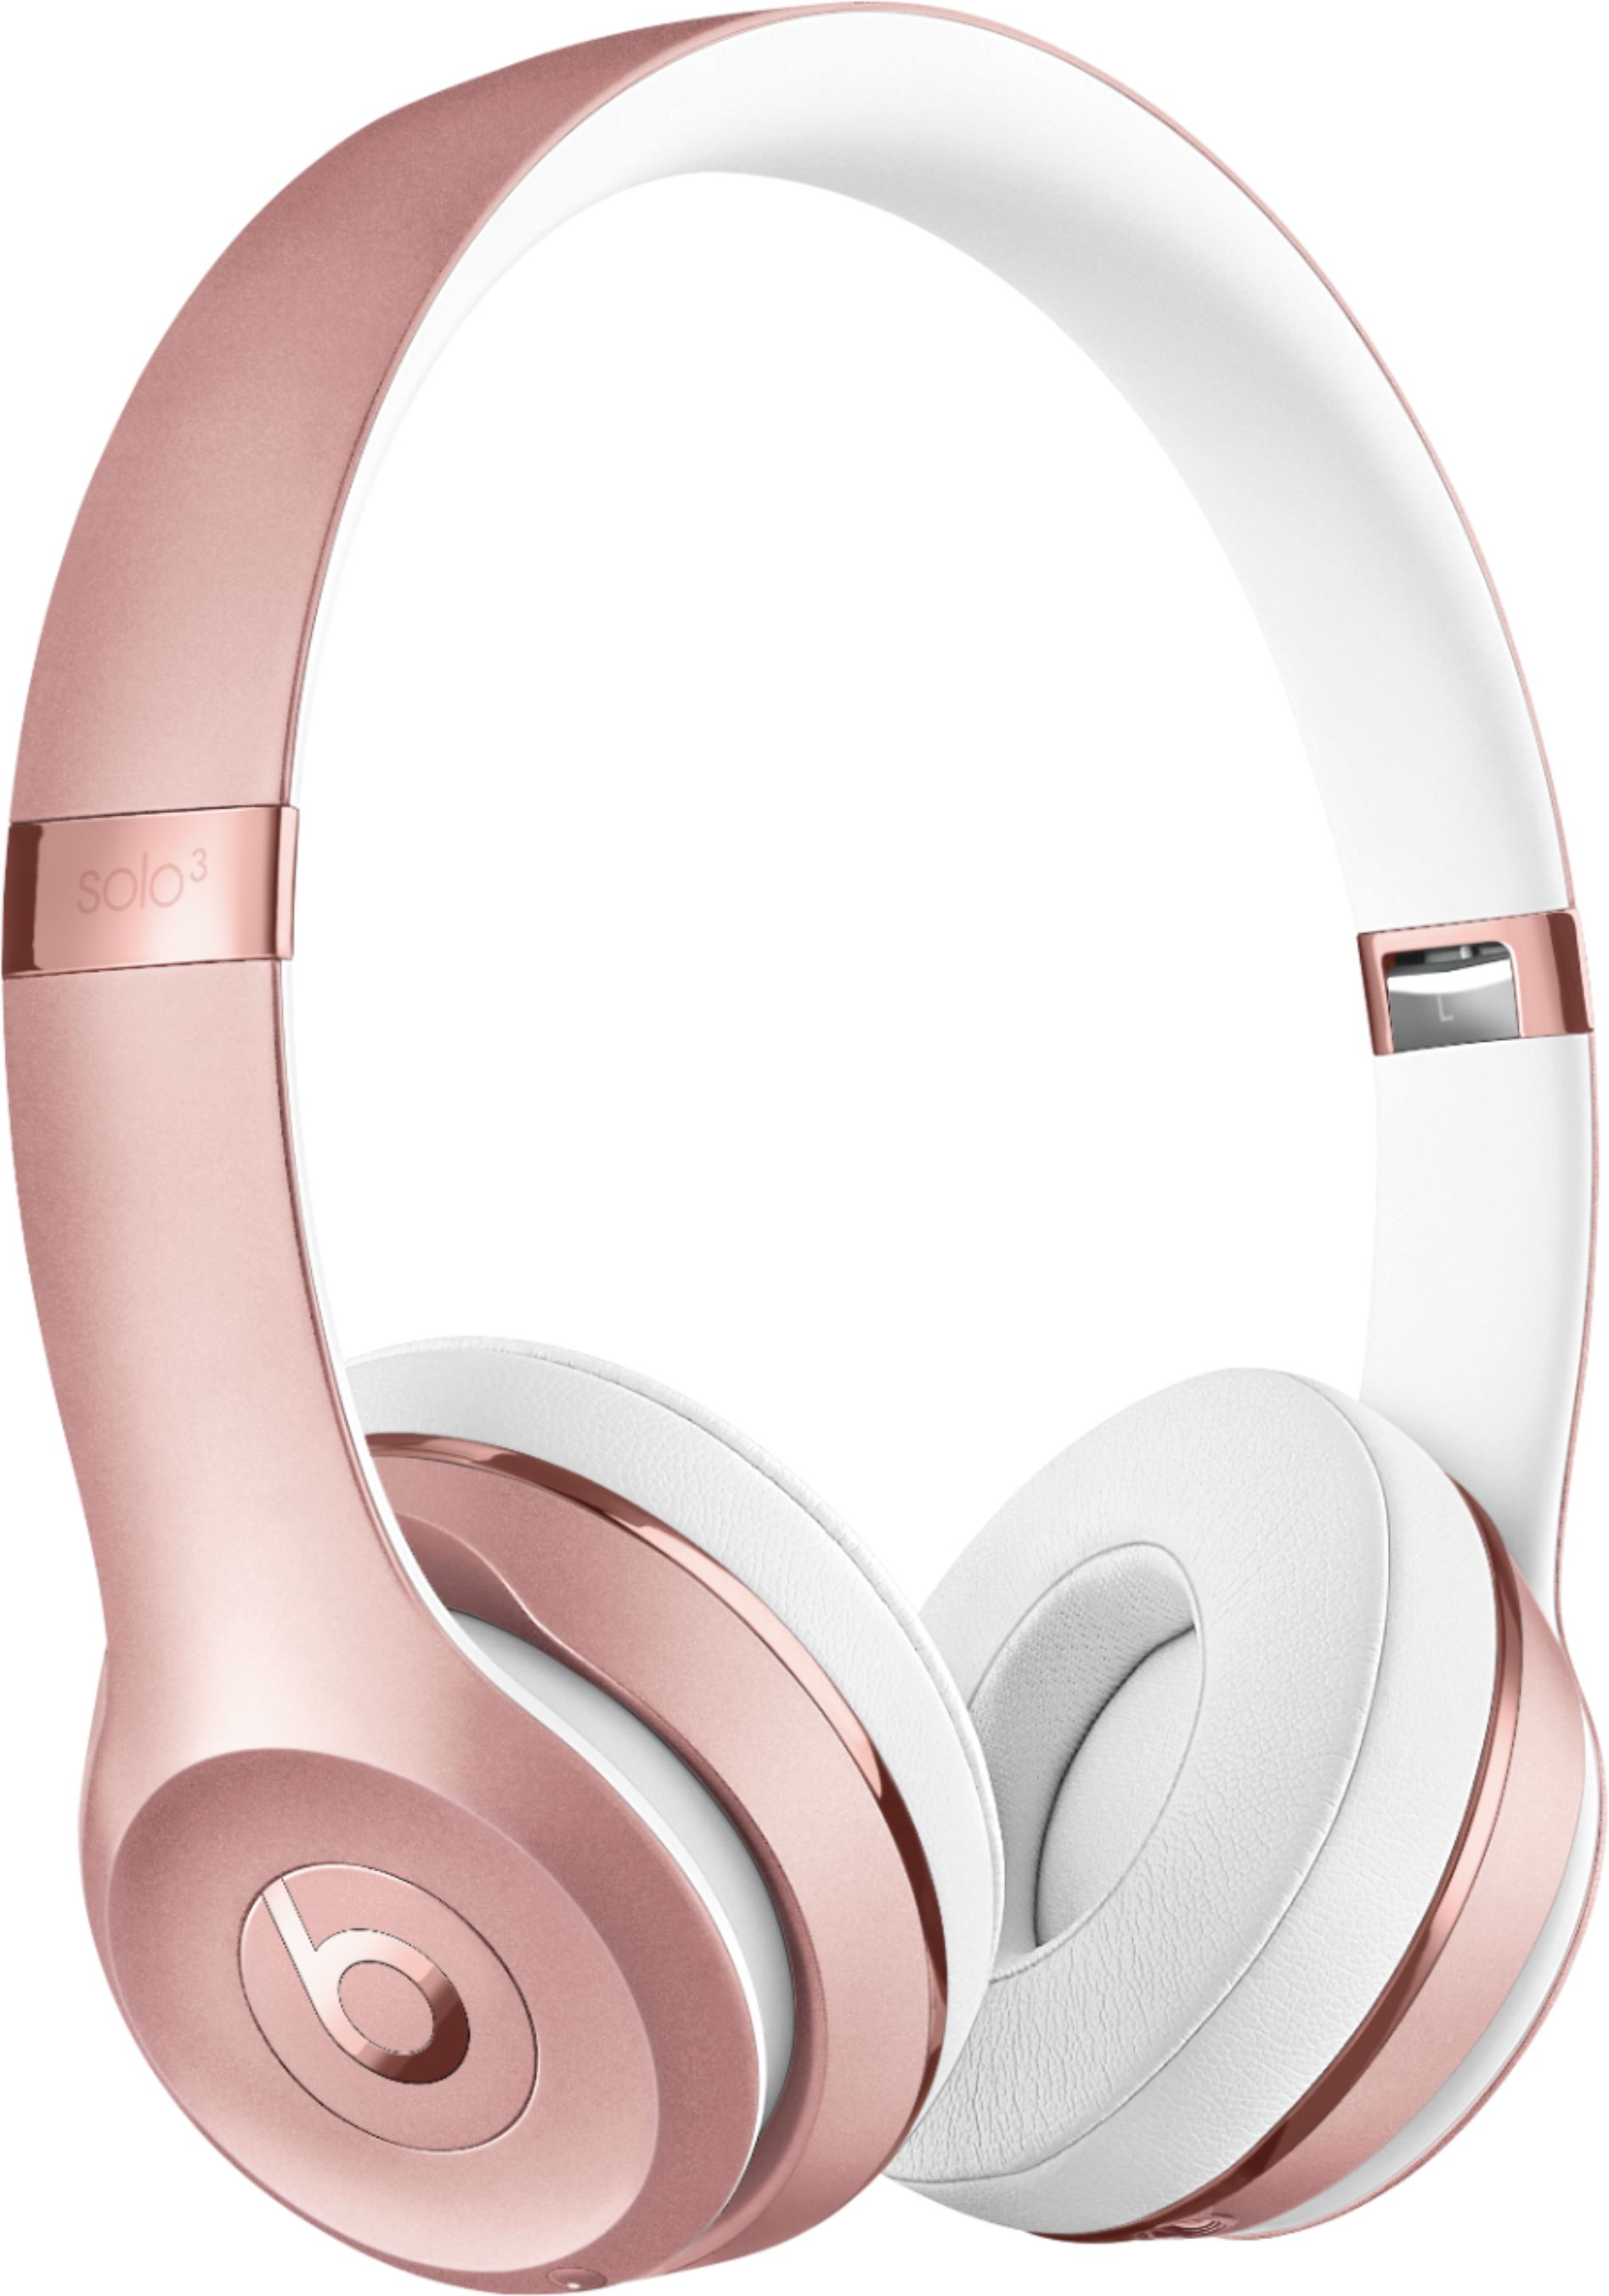 Beats by Dr. Dre Solo³ Wireless On-Ear Headphones Rose Gold MX442LL/A - Best Buy